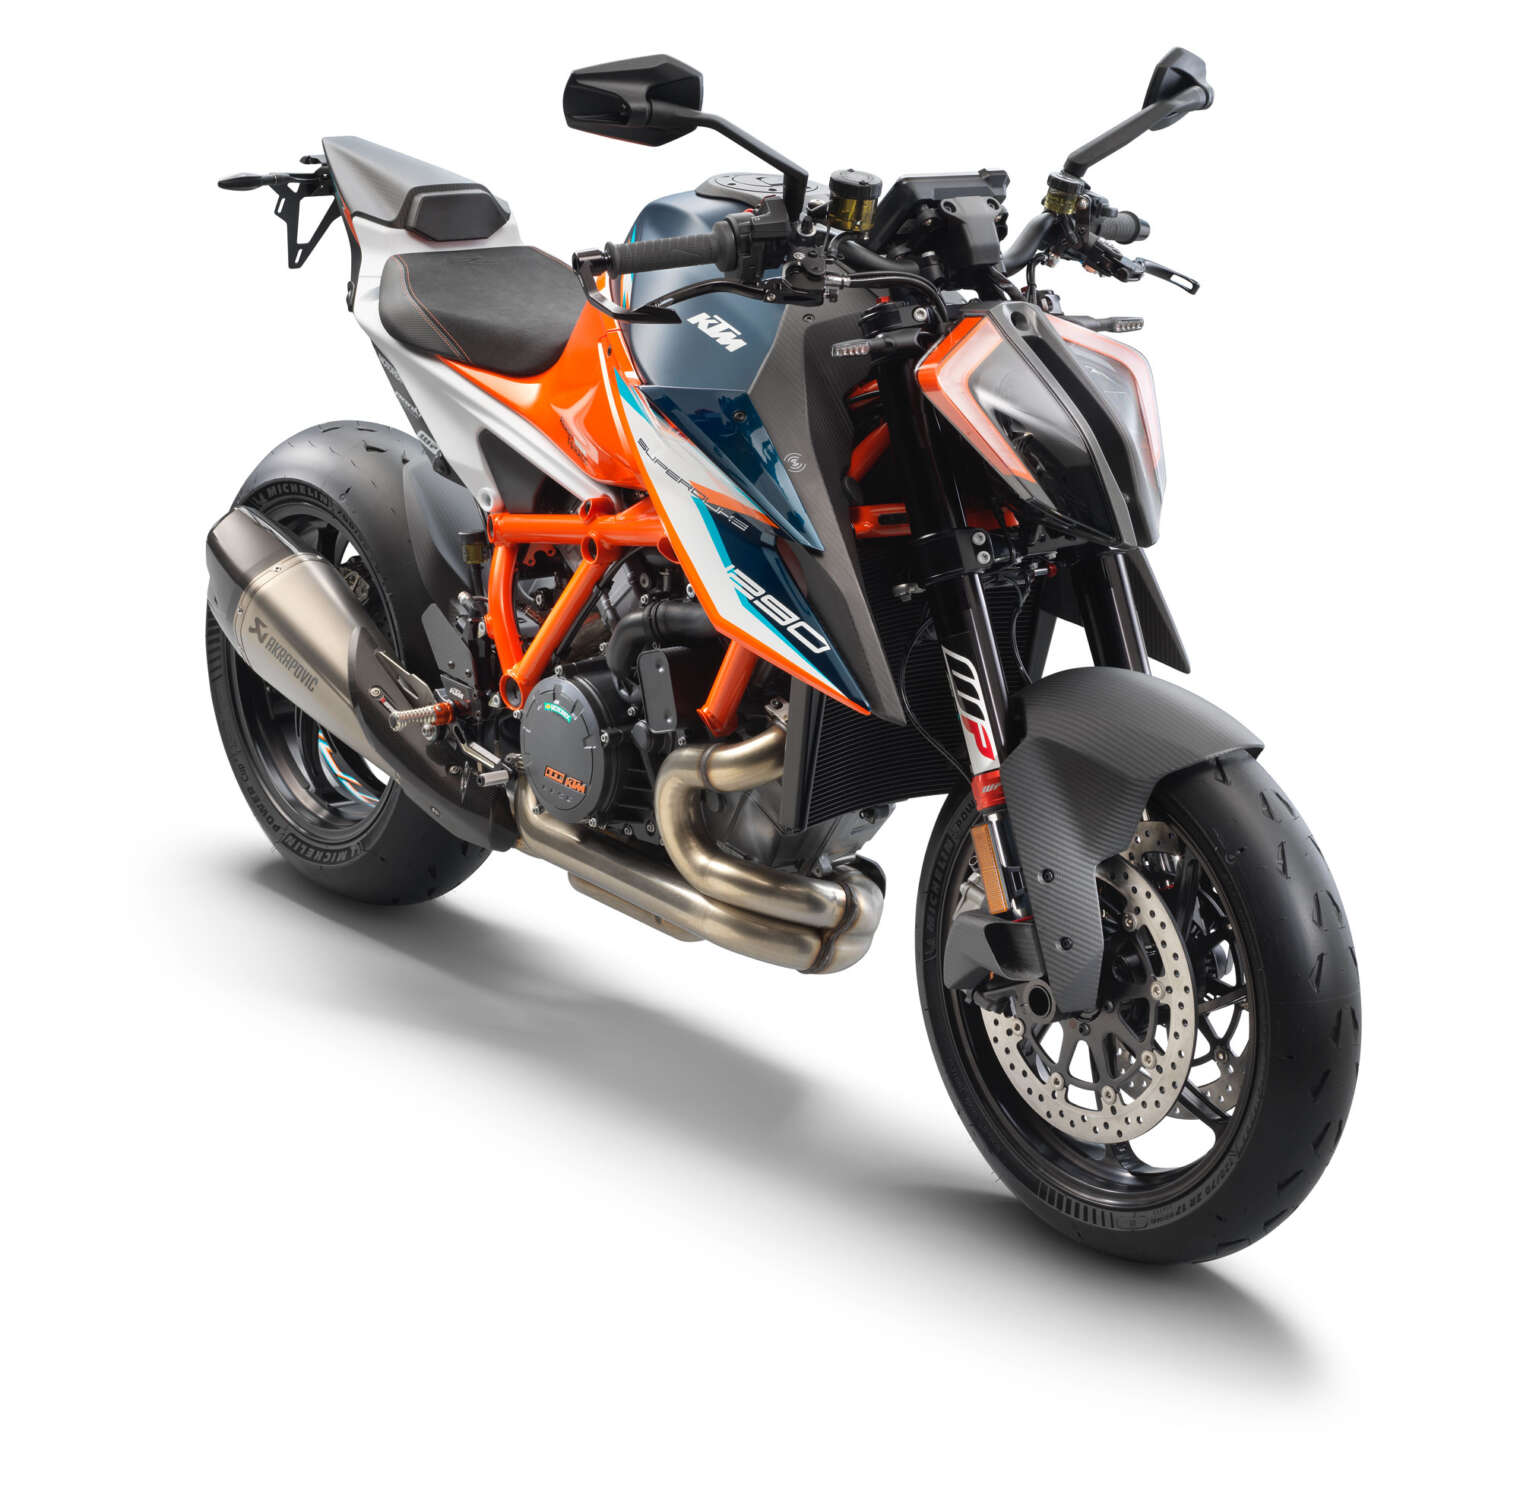 2021 KTM 1290 Super Duke RR Guide • Total Motorcycle